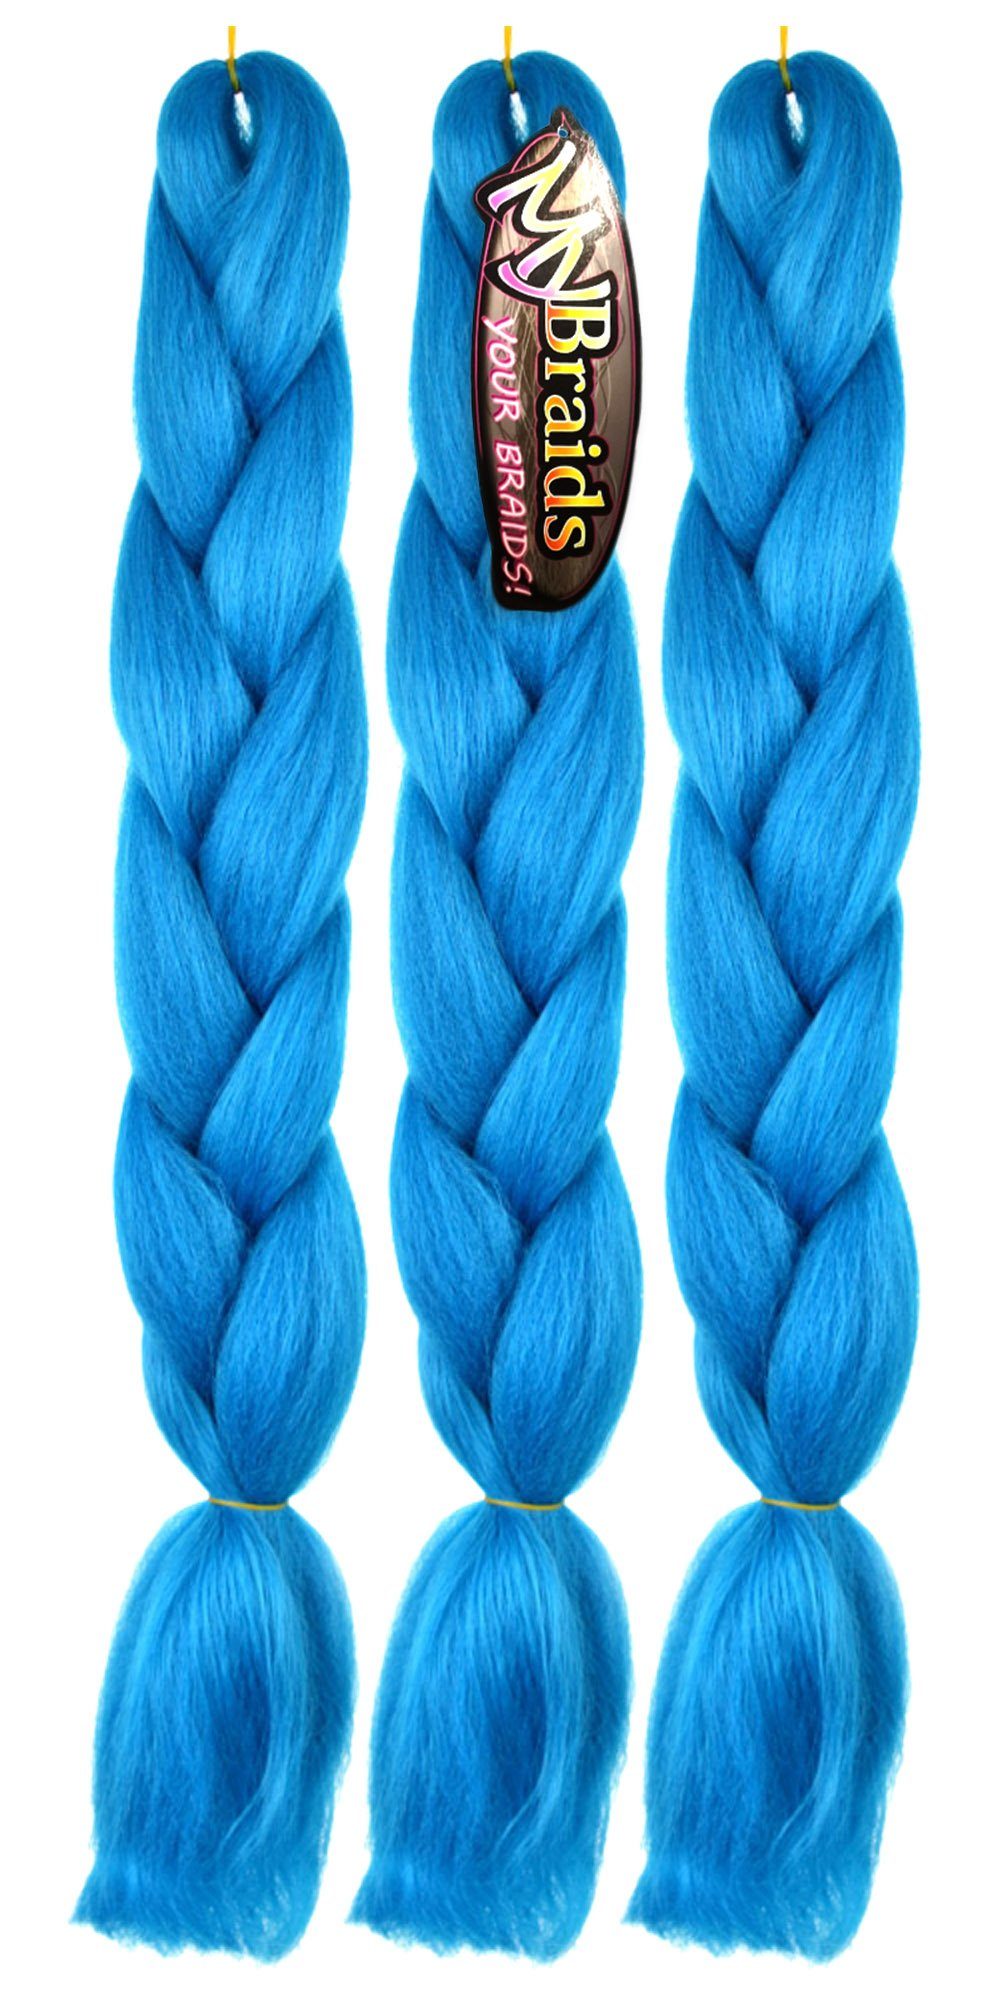 YOUR Enzianblau Zöpfe 30-AY Kunsthaar-Extension Braids BRAIDS! 3er Jumbo Pack Flechthaar im MyBraids 1-farbig